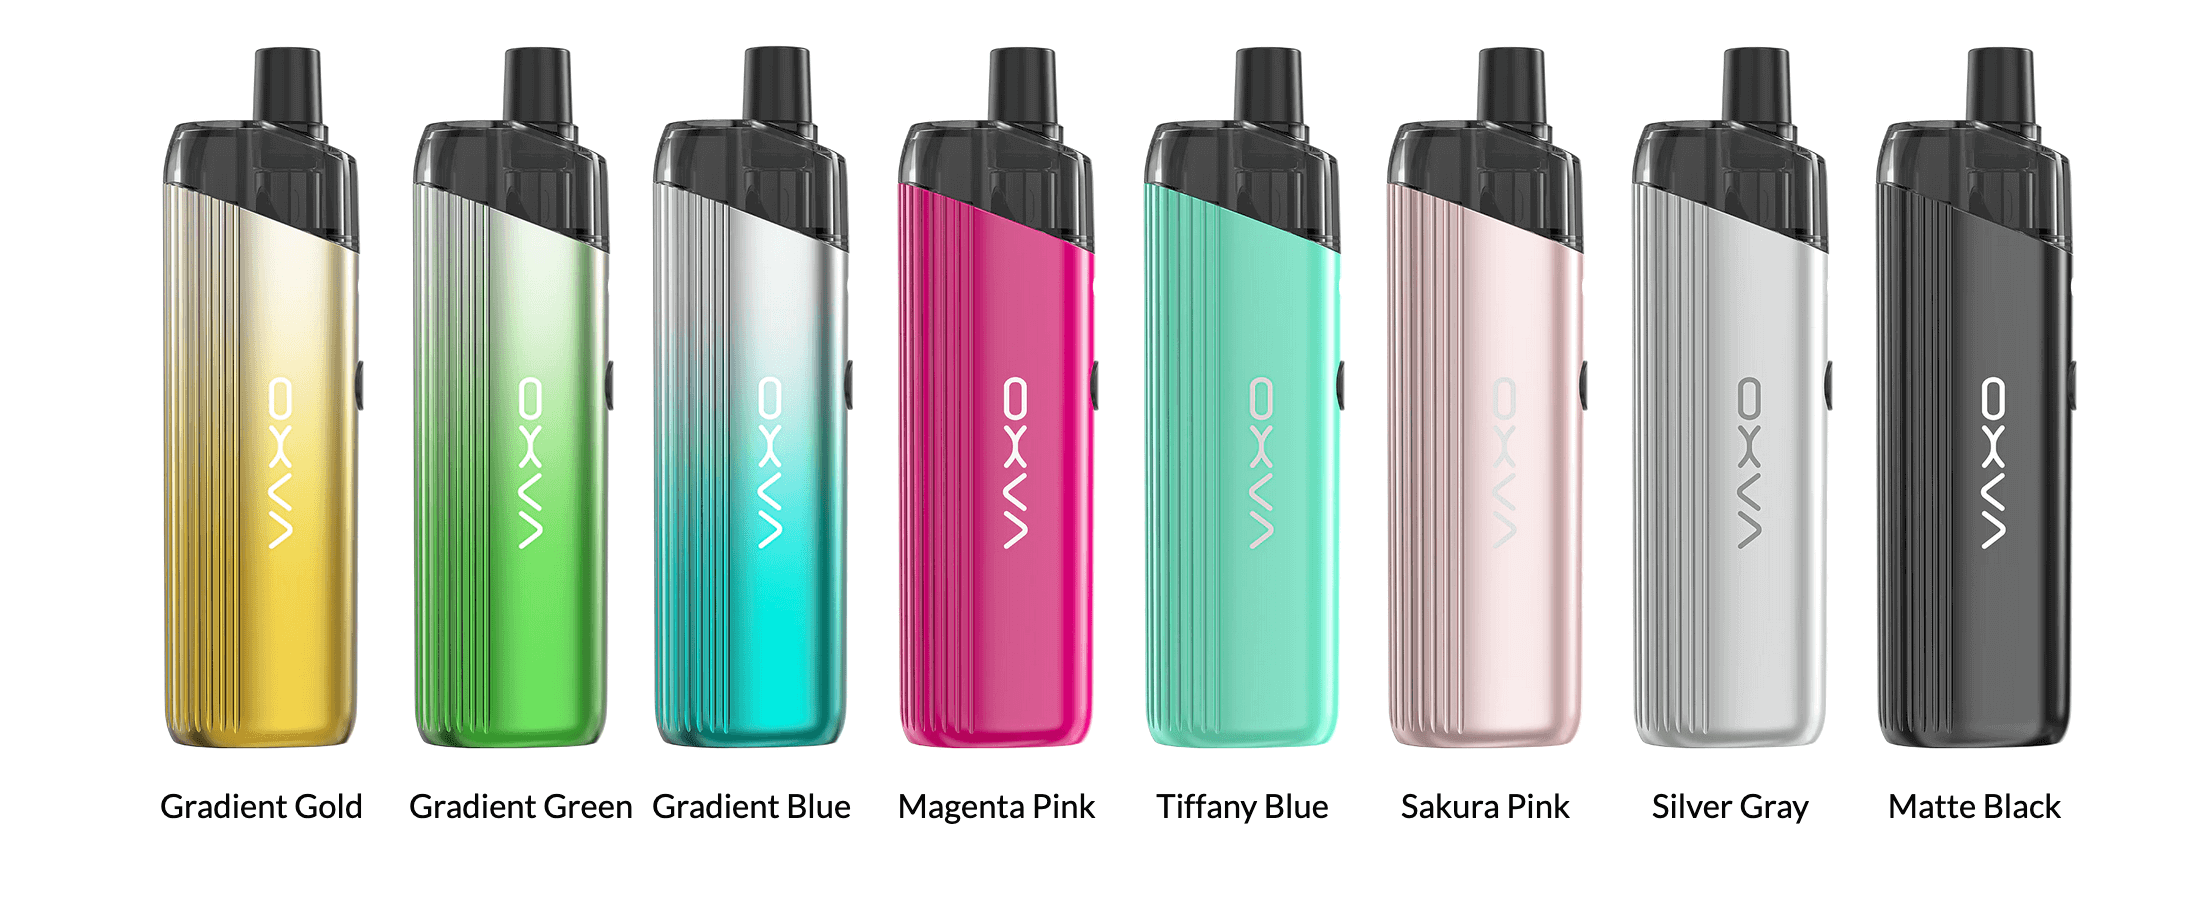 Oxva Origin SE Colour Options | Gradient Gold, Gradient Green, Gradient Blue, Magenta Pink, Tiffany Blue, Sakura Pink, Silver Grey, Matte Black